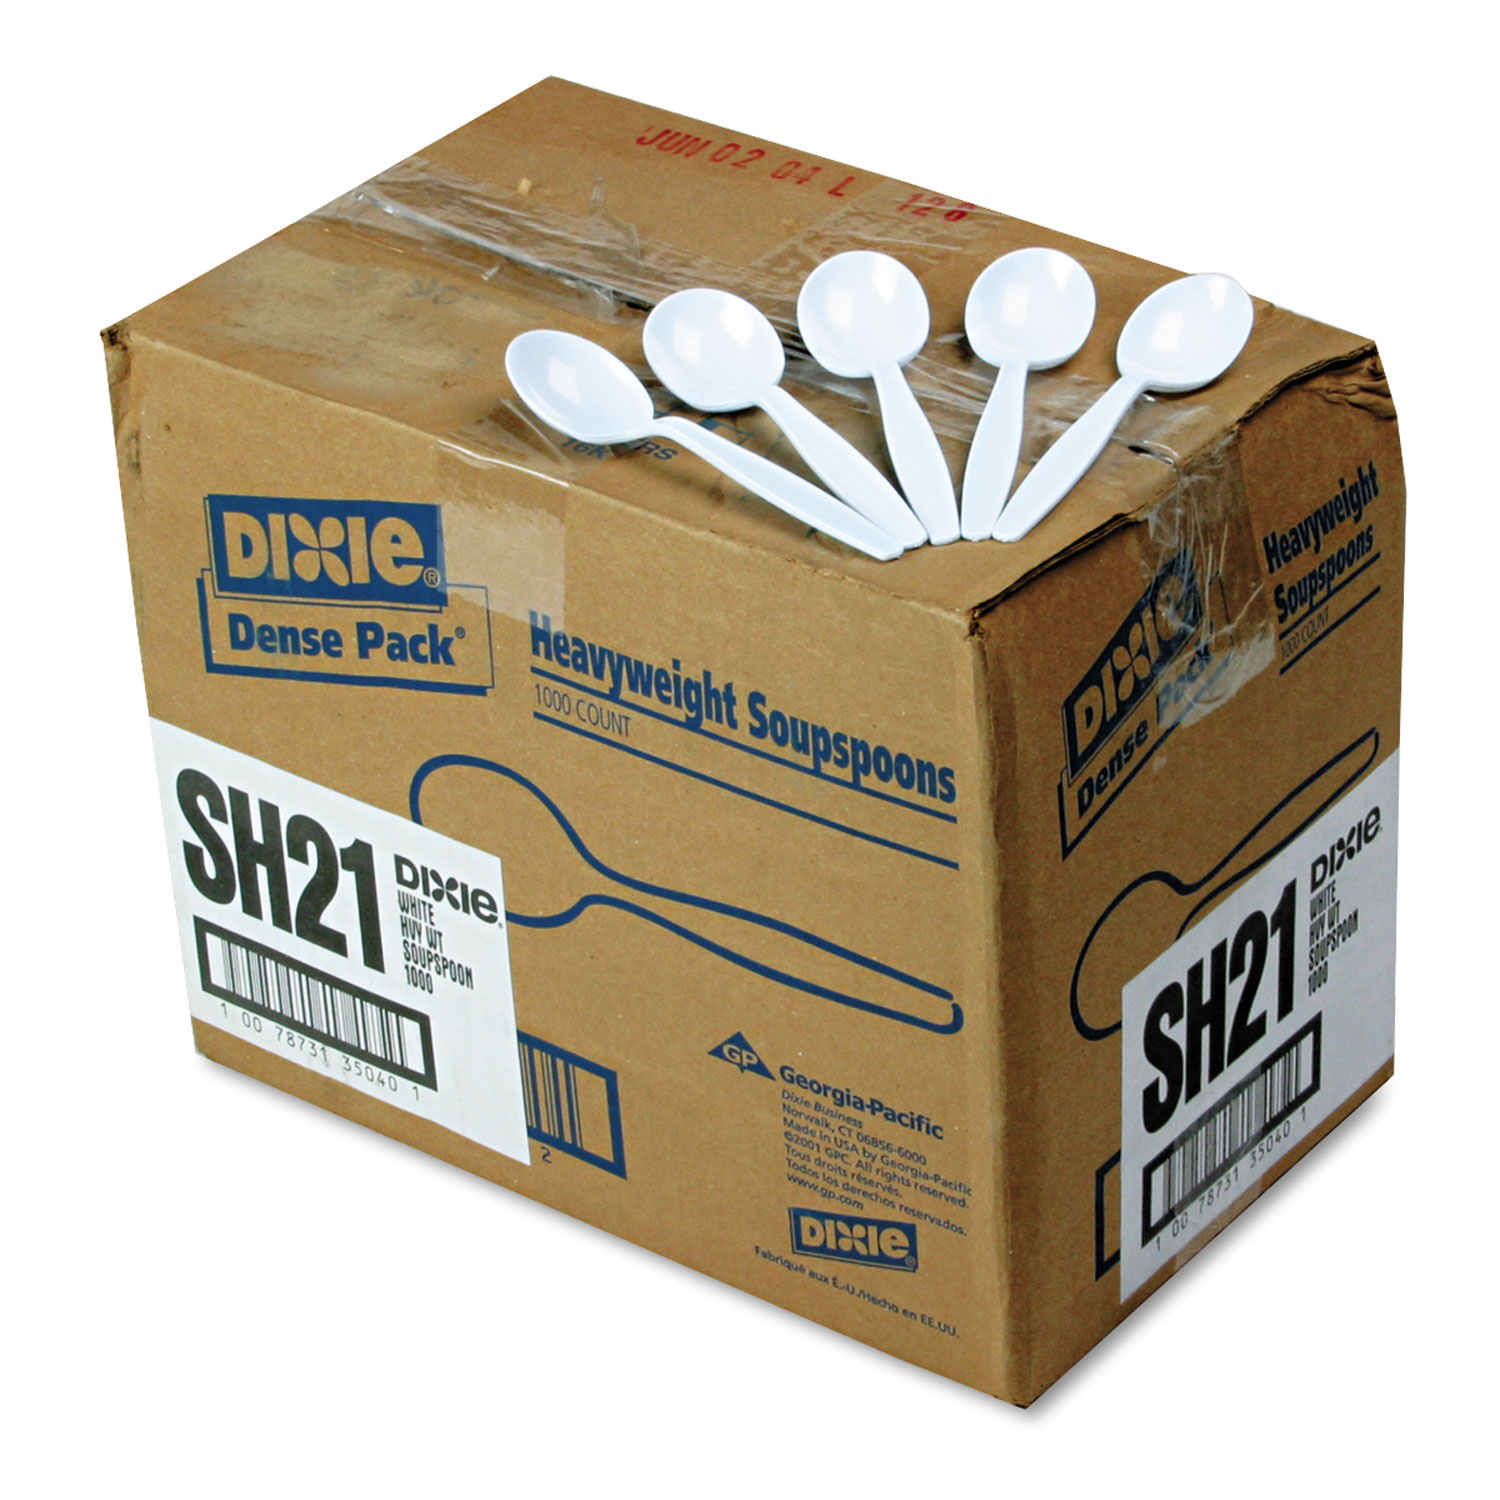  Dixie SH217 Plastic Cutlery, Heavyweight Soup Spoons, White, 1,000/Carton (DXESH217) 